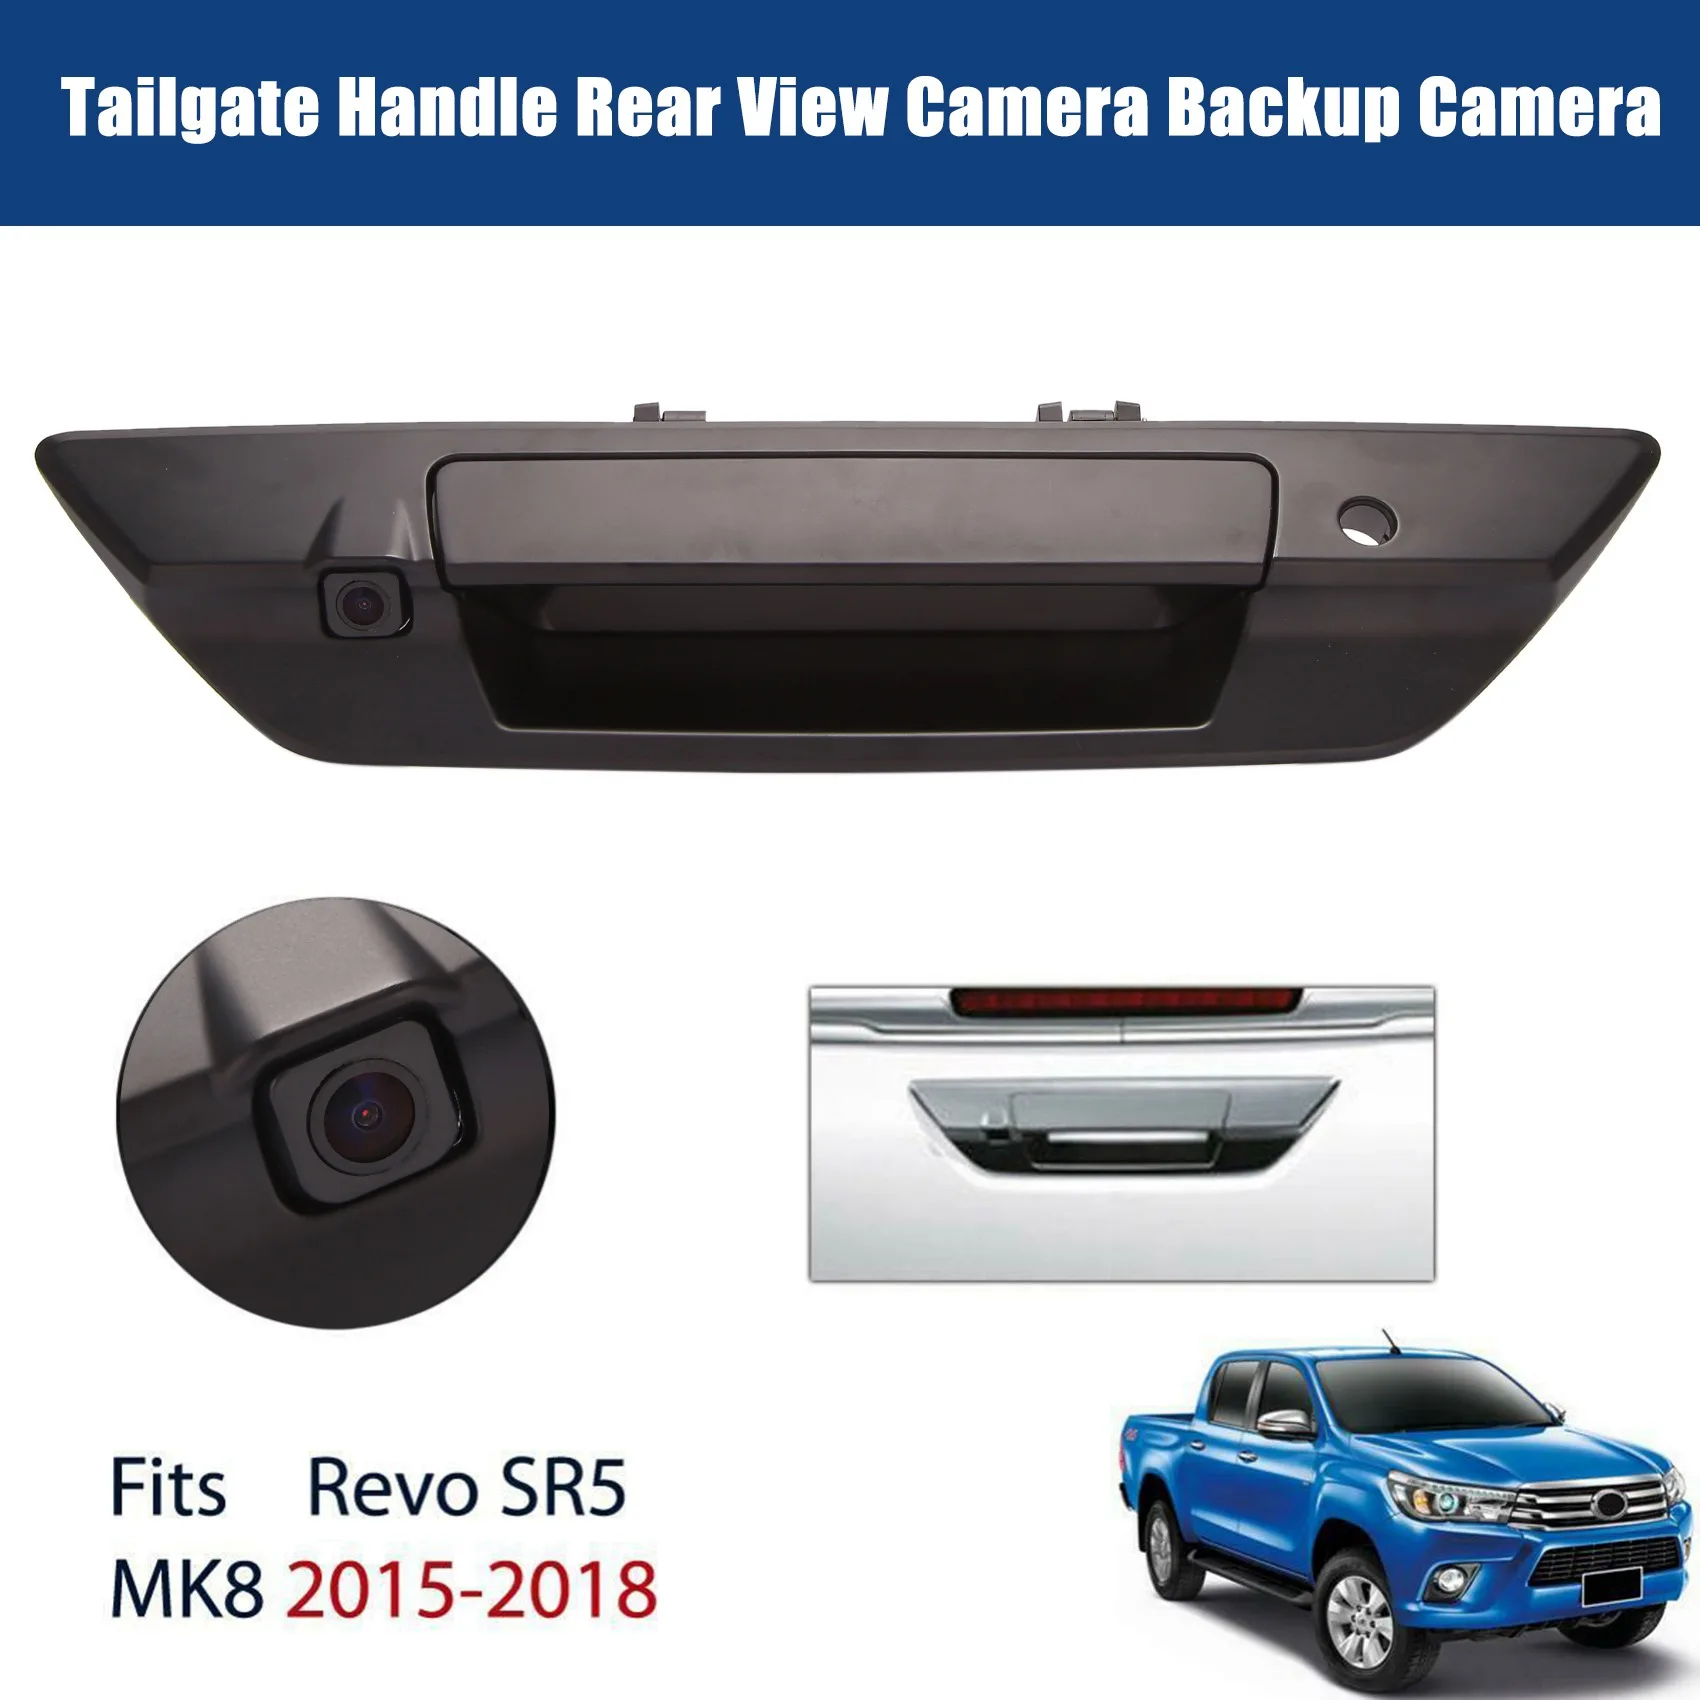 

Black Car Tailgate Handle Rear View Camera Backup Camera for Toyota Hilux SR5 M80 2016-2018 69090-0K350